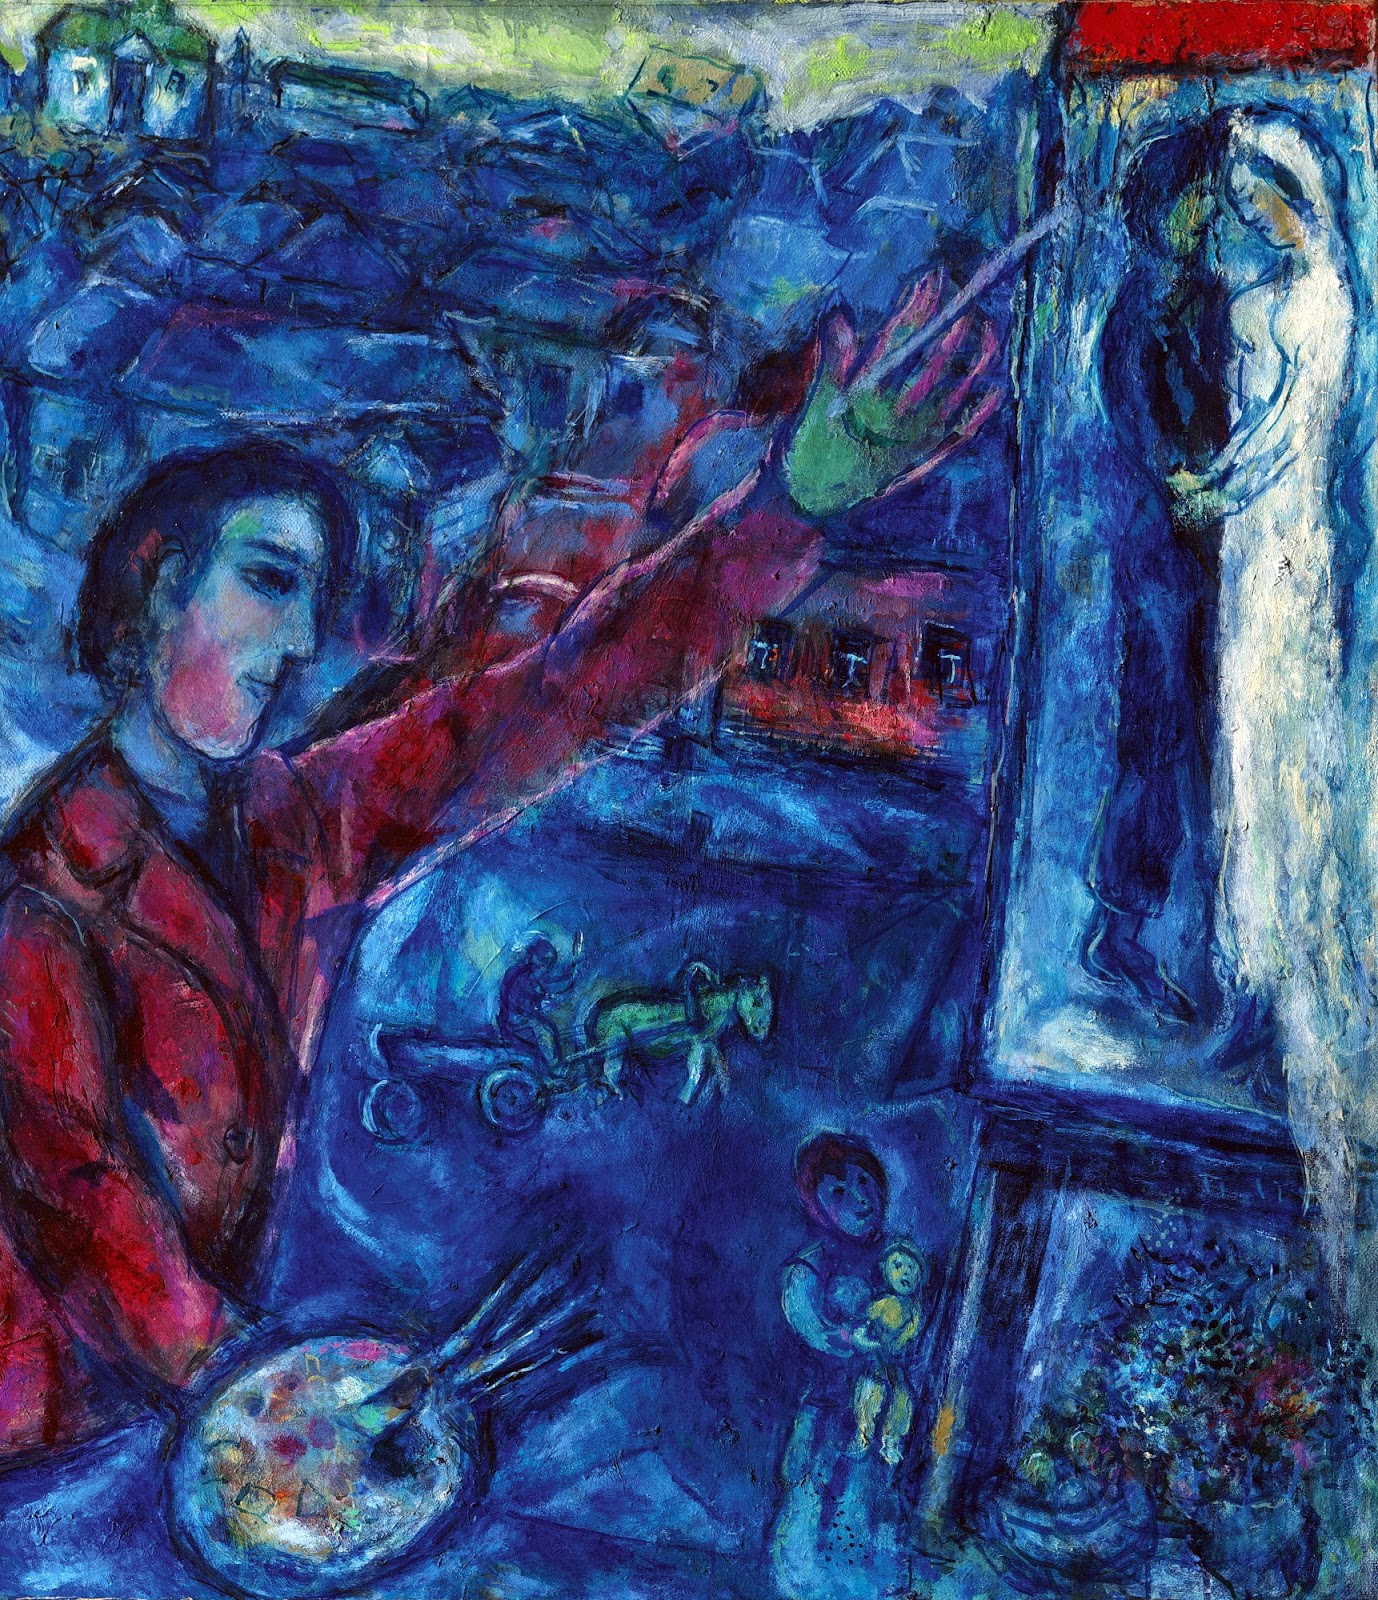 Marc+Chagall-1887-1985 (259).jpg